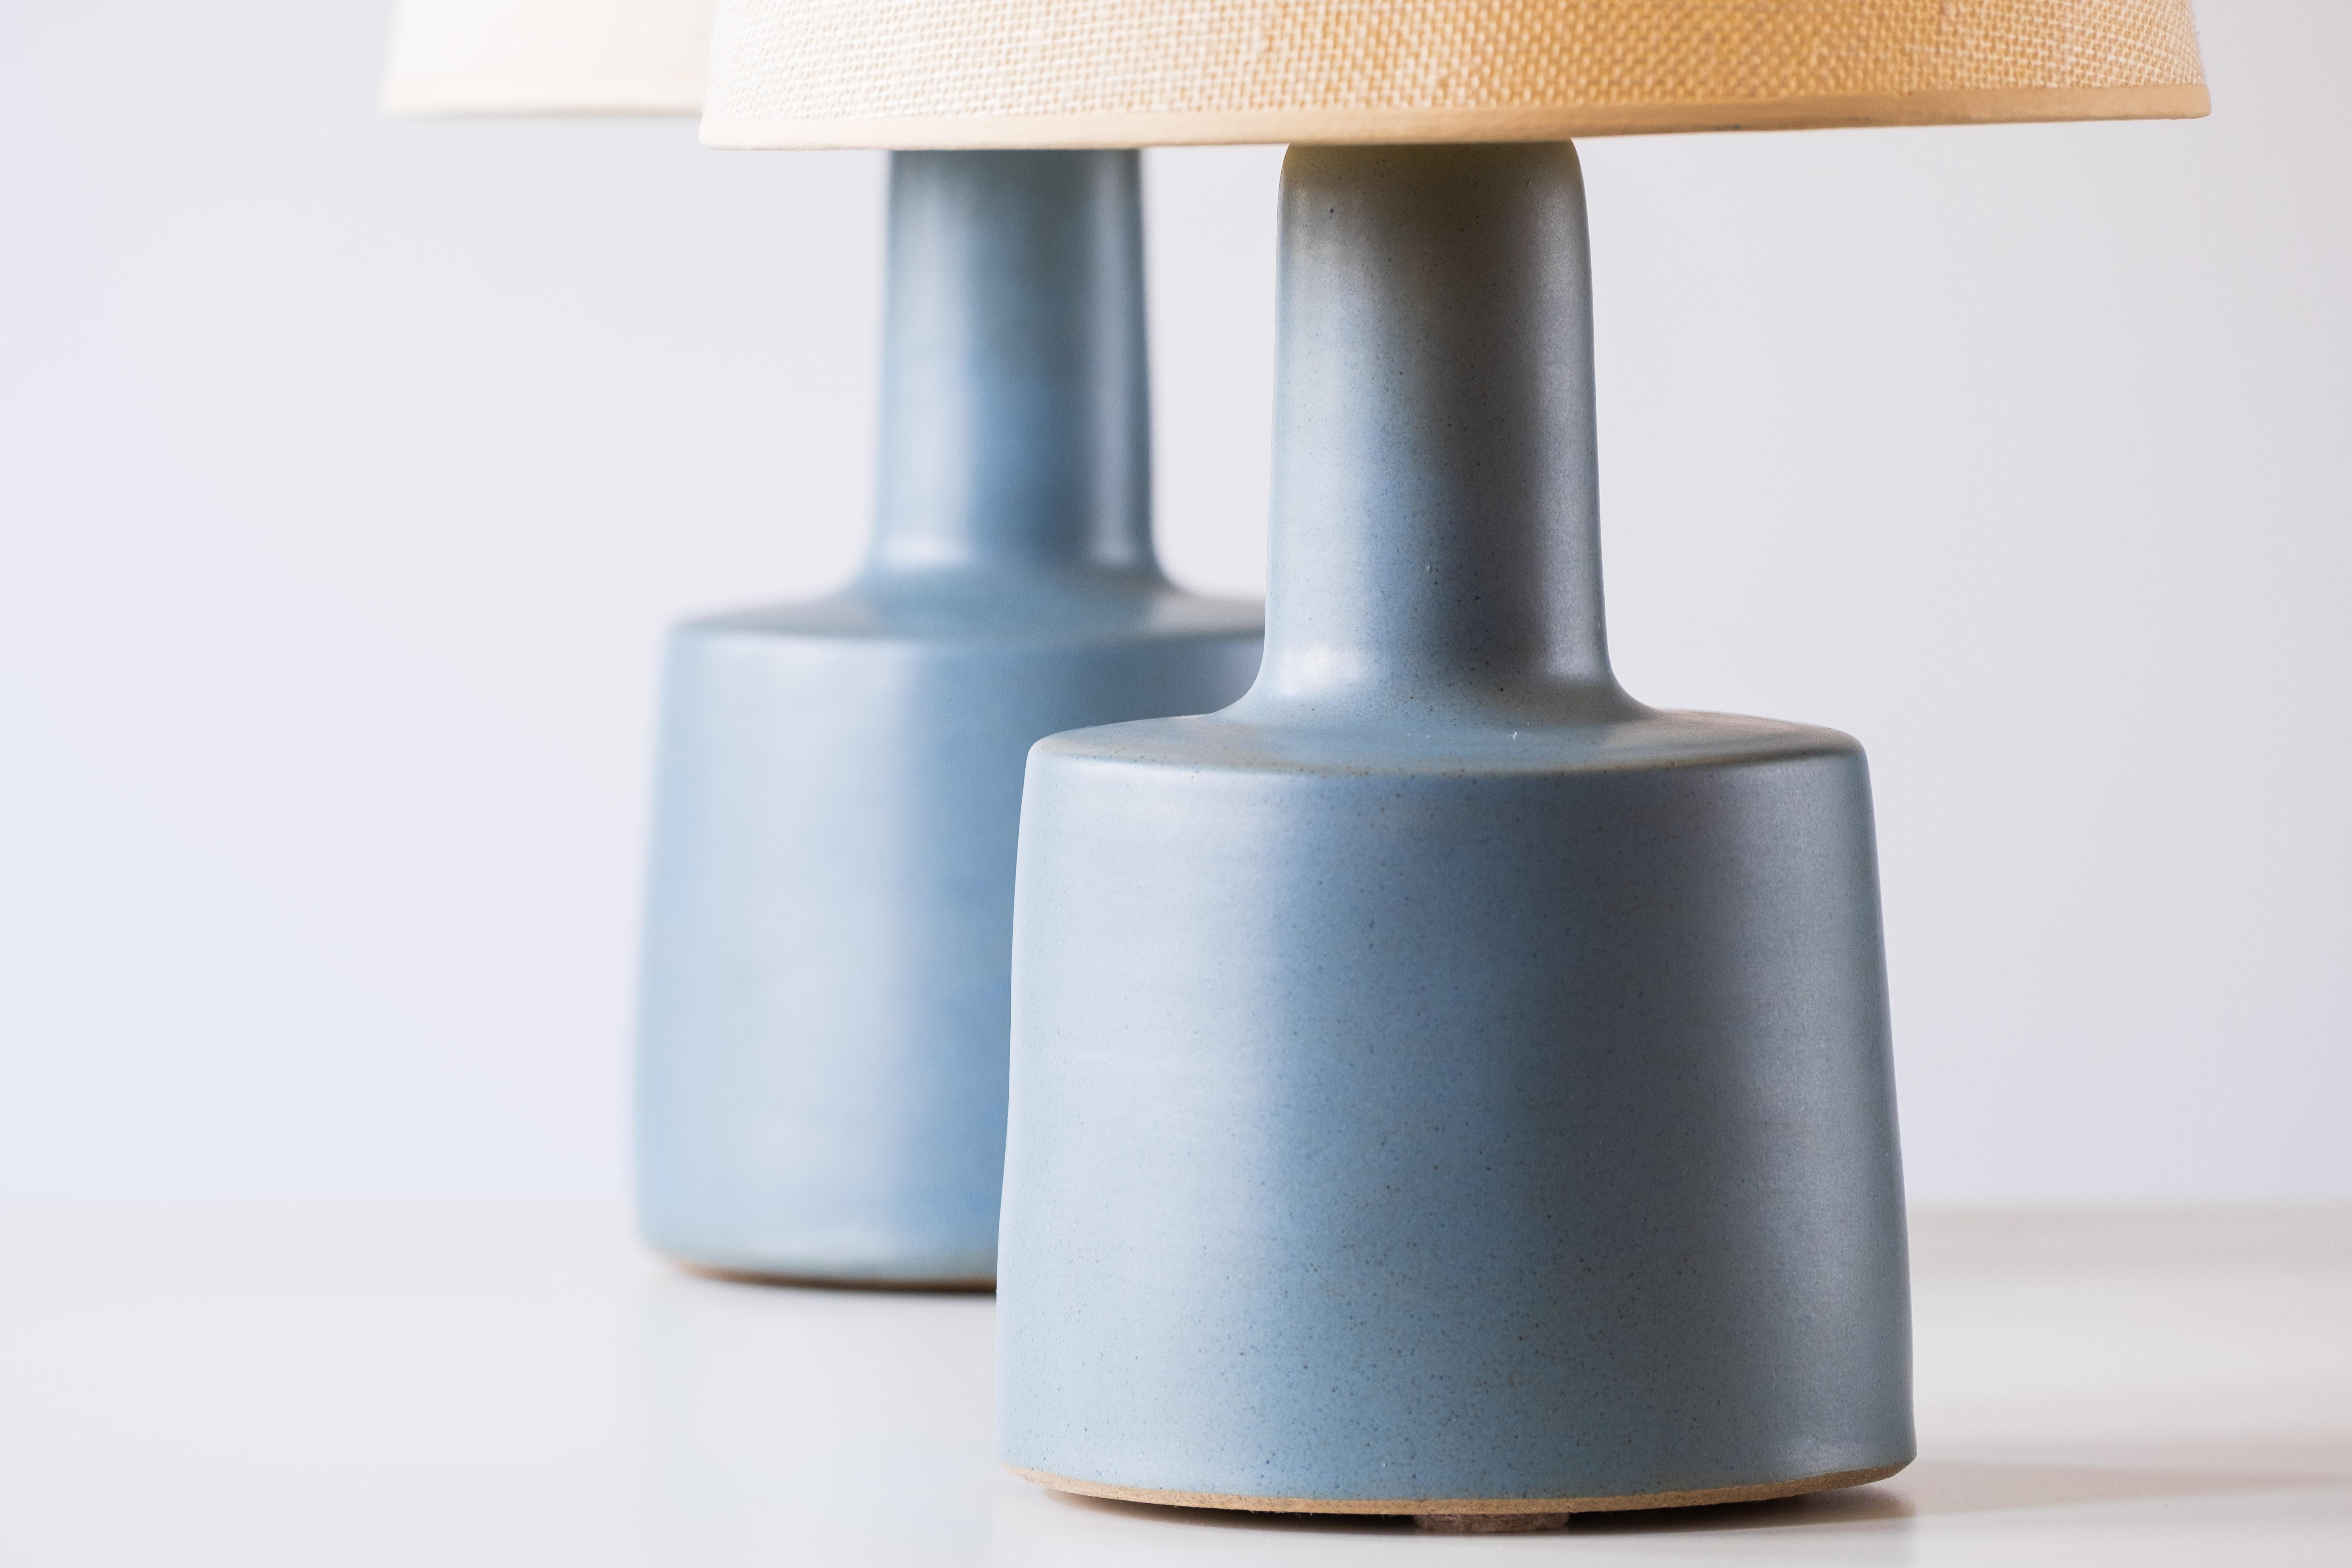 Mid-20th Century Martz / Marshall Studios Ceramic Table Lamp Pair, Robins Egg Blue Glaze